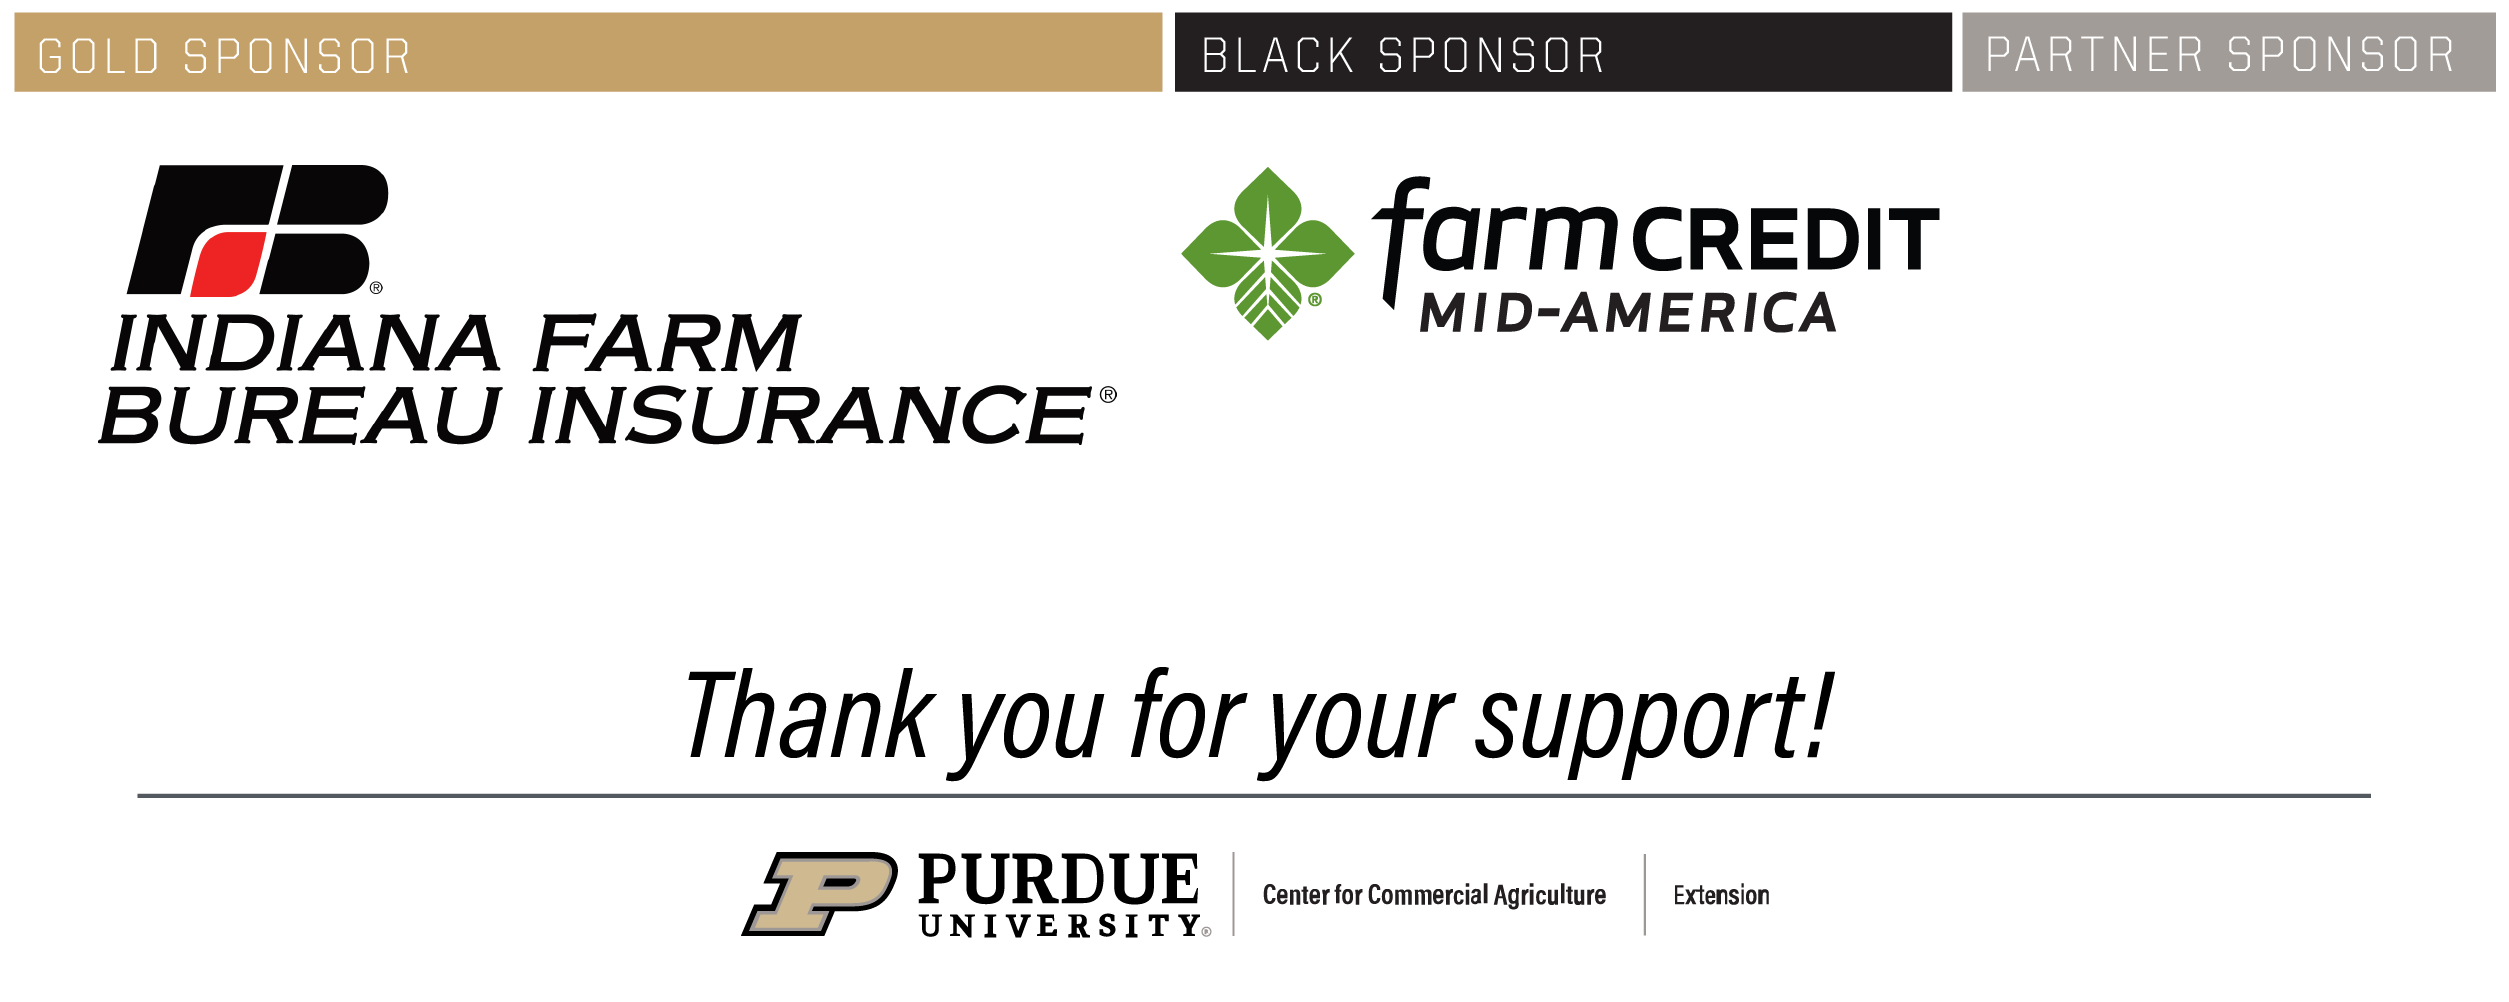 Indiana Farm Bureau Insurance and Farm Credit Mid-America sponsor logos